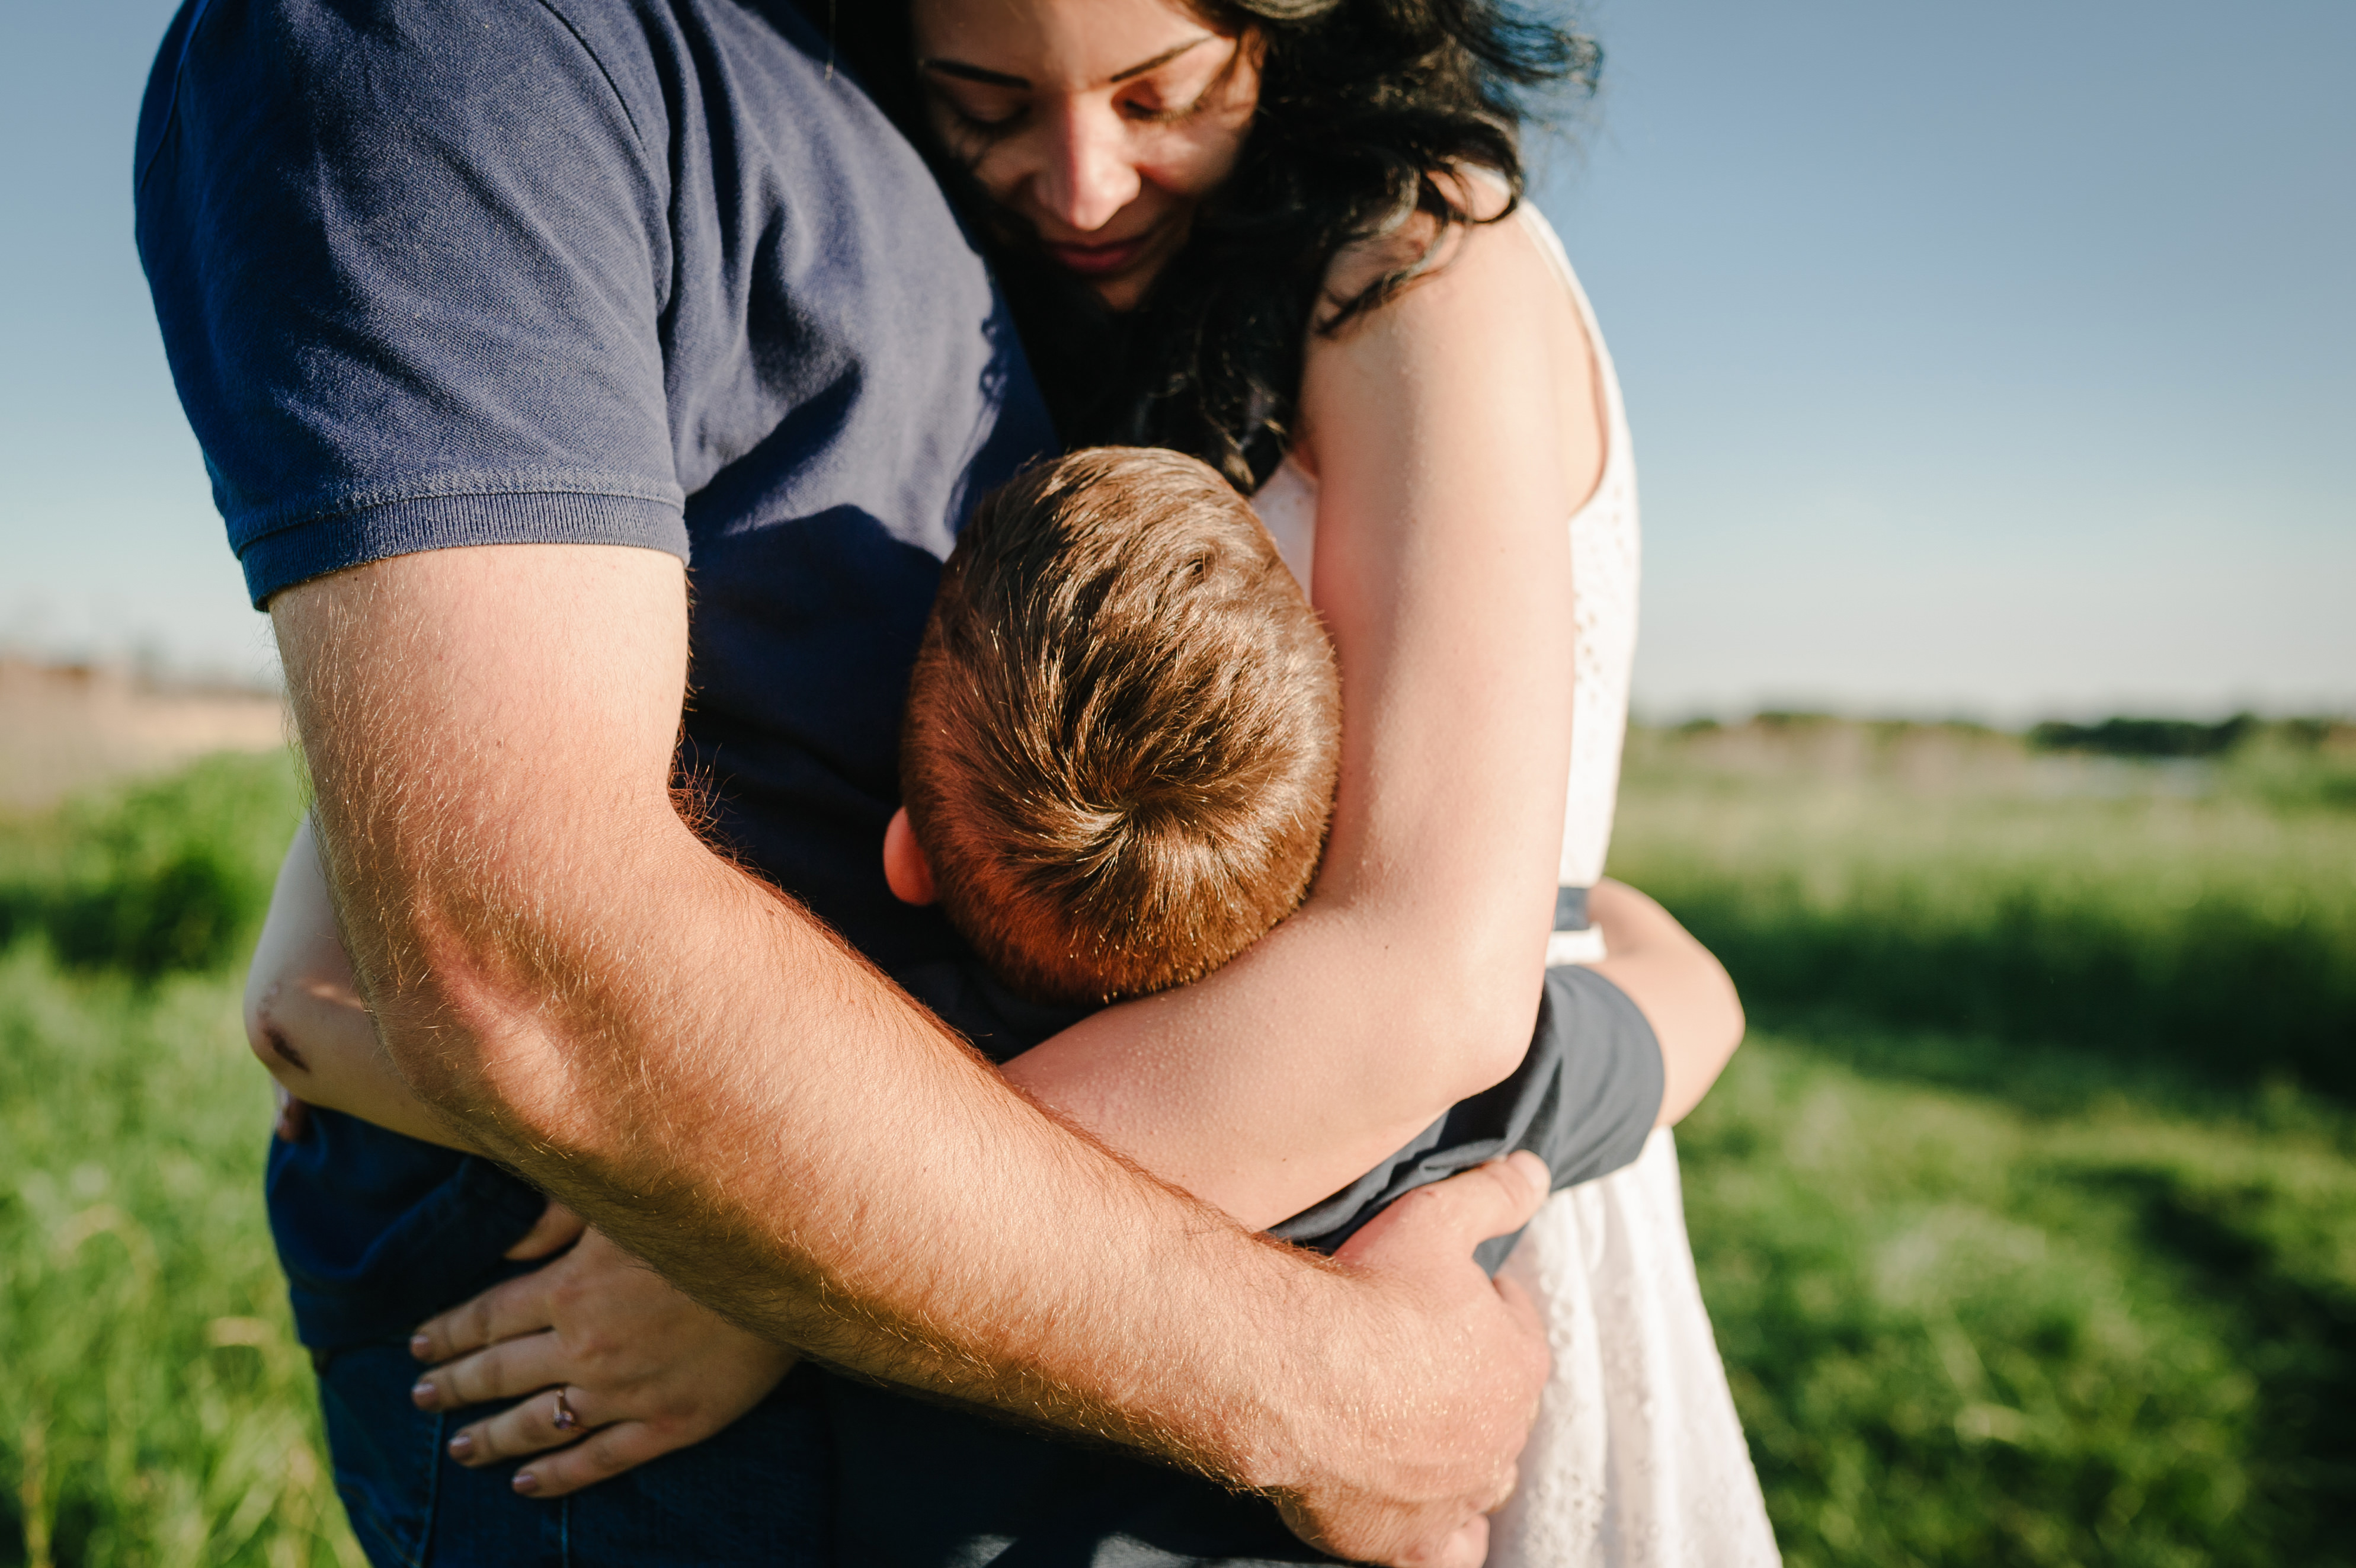 Niño abraza a sus padres | Fuente: Shutterstock.com